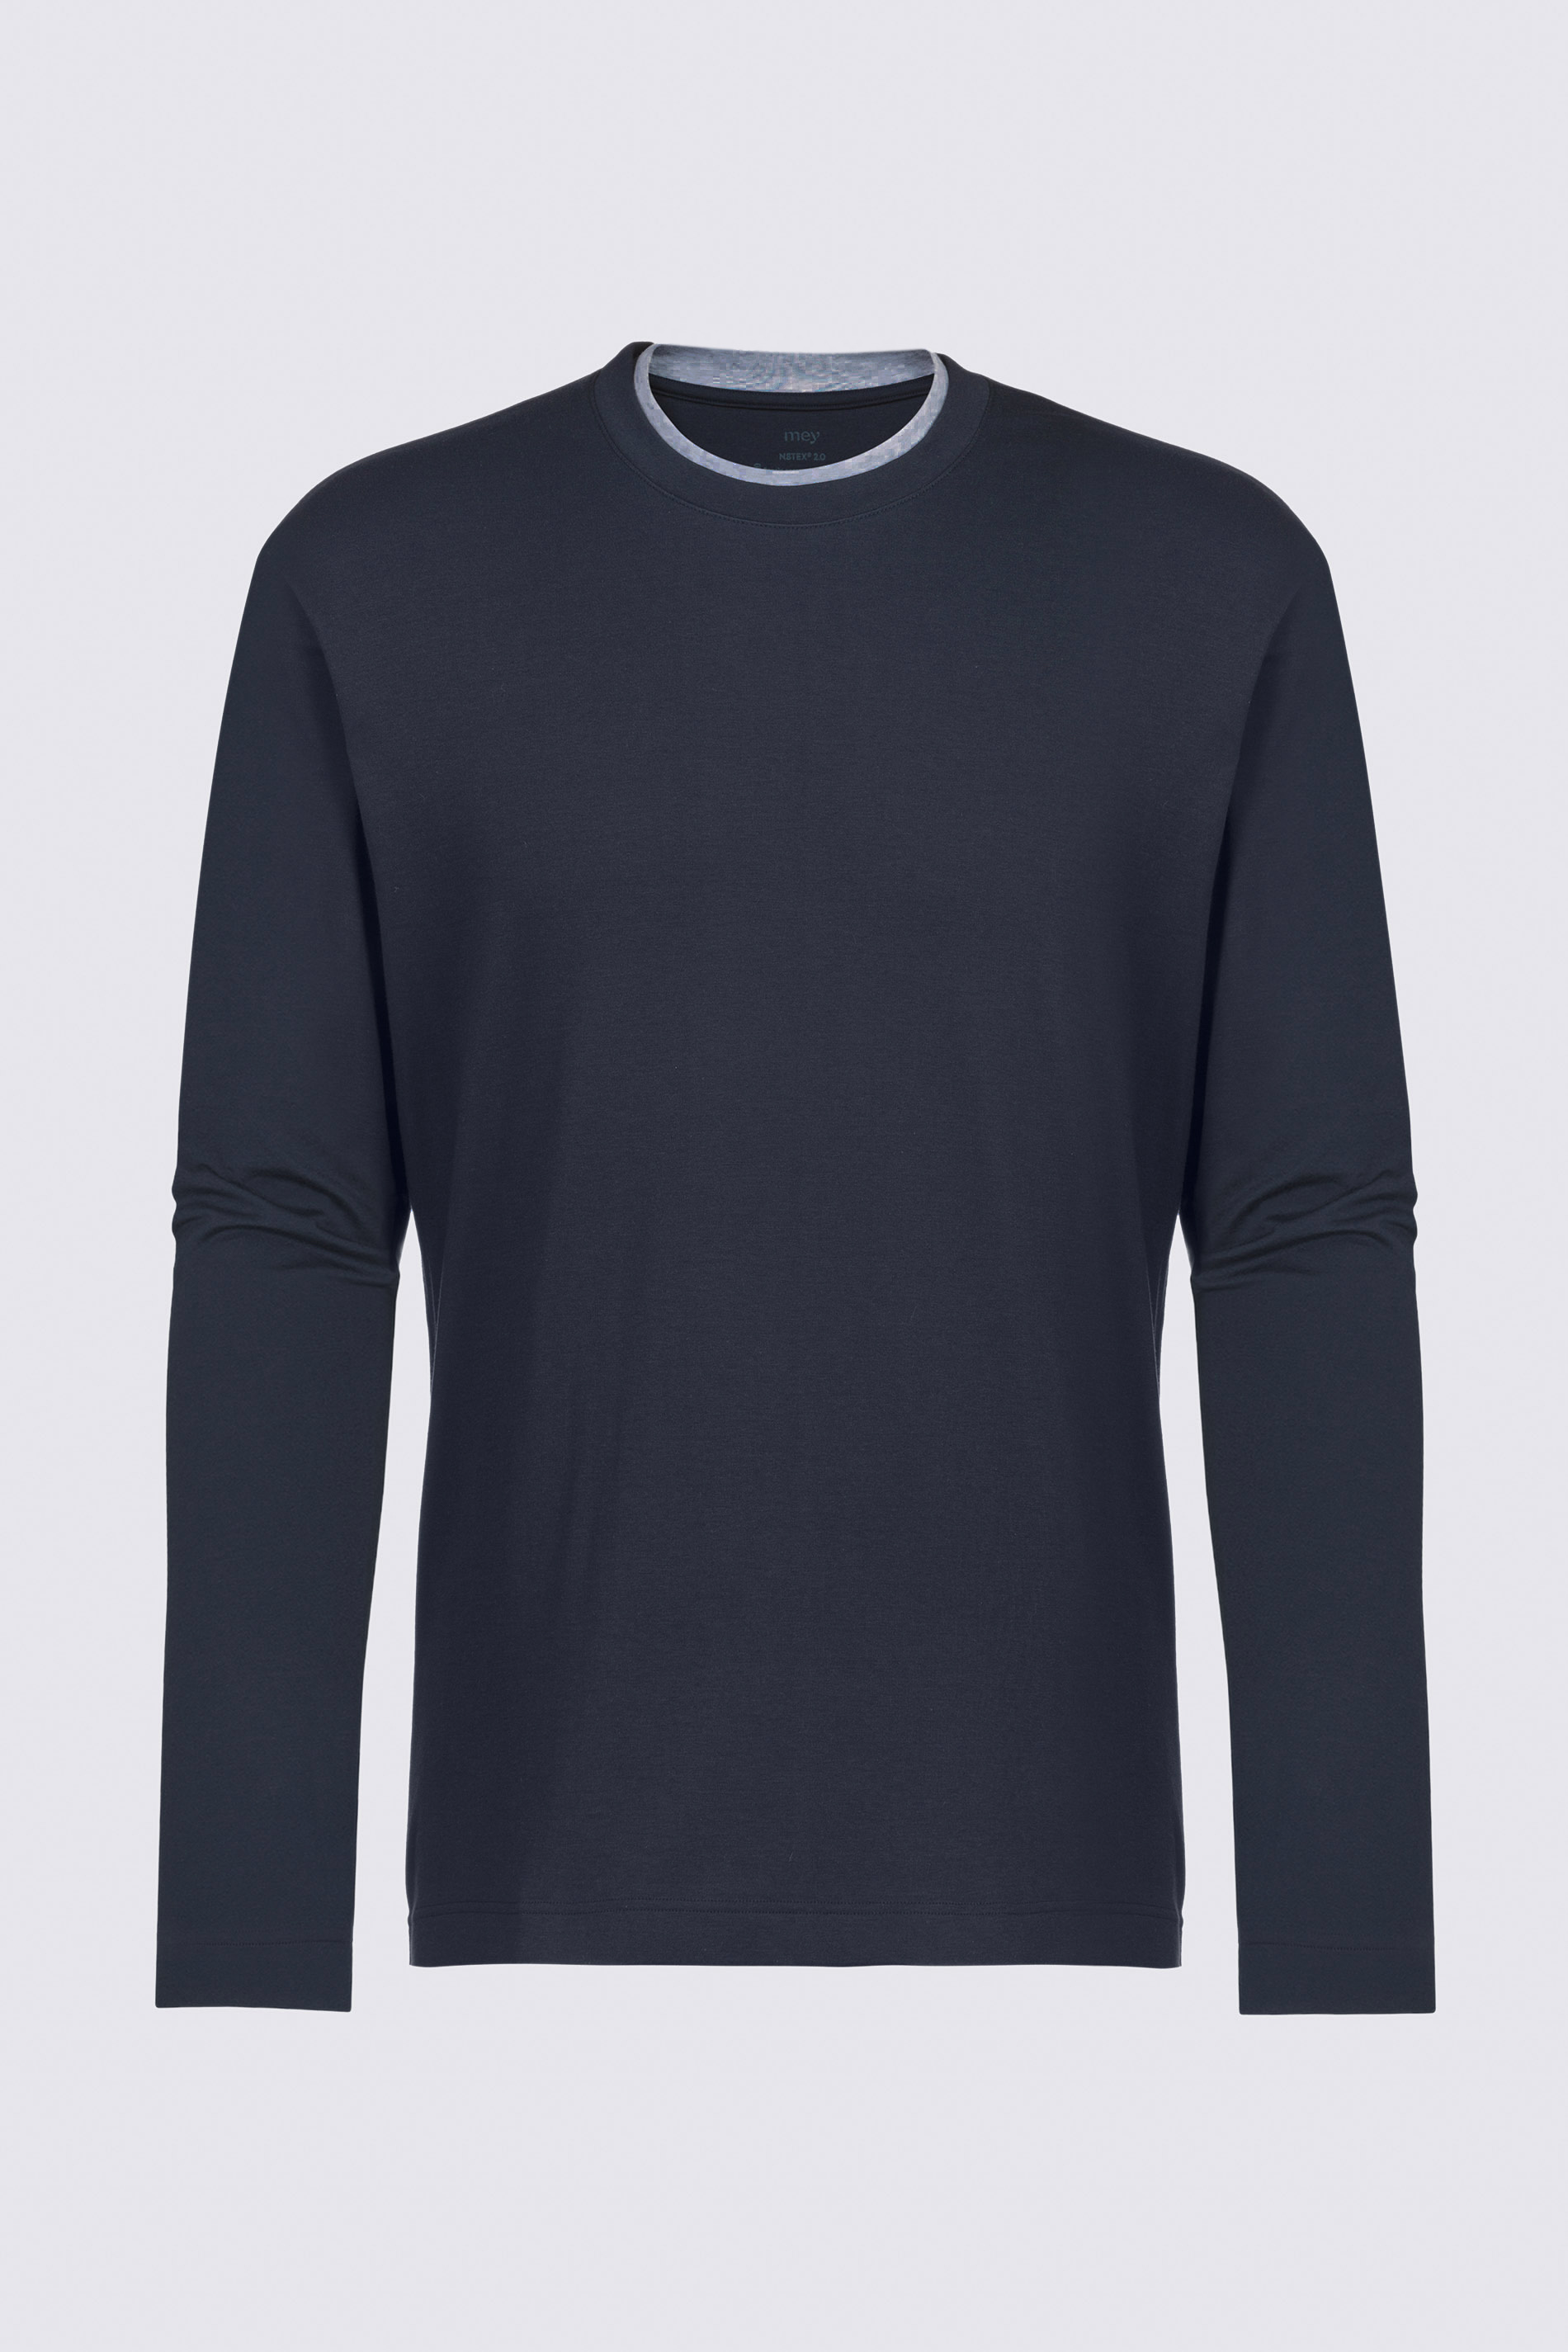 Langarm-Shirt Serie N8TEX 2.0 Freisteller | mey®